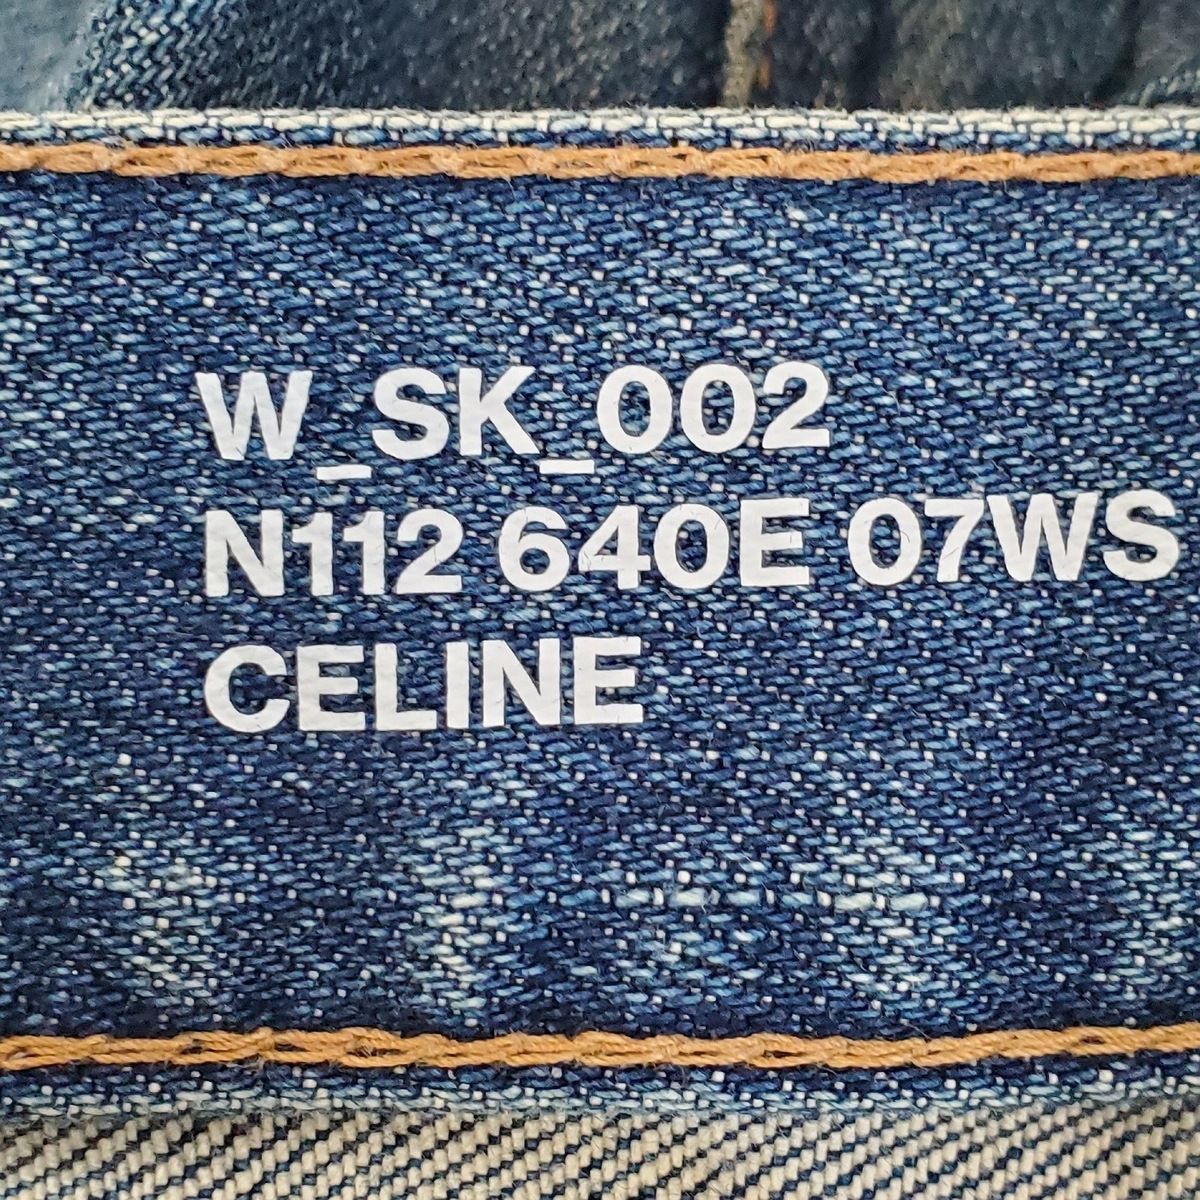 CELINE(セリーヌ) ジーンズ サイズ26 S レディース - ブルー ストレート